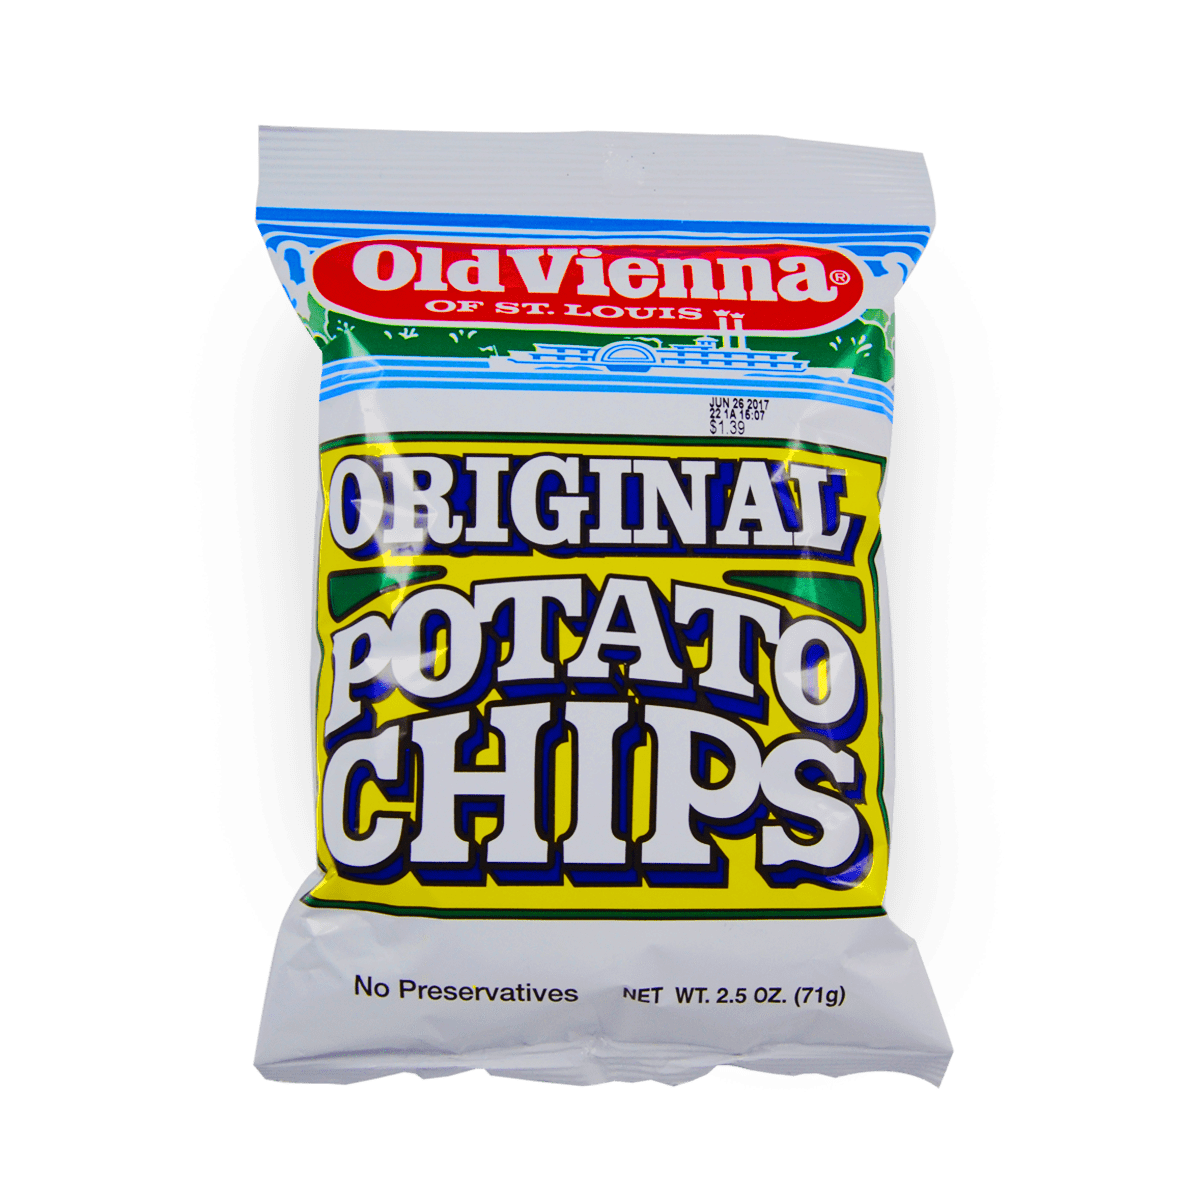 potato chips, home old vienna louis #24046